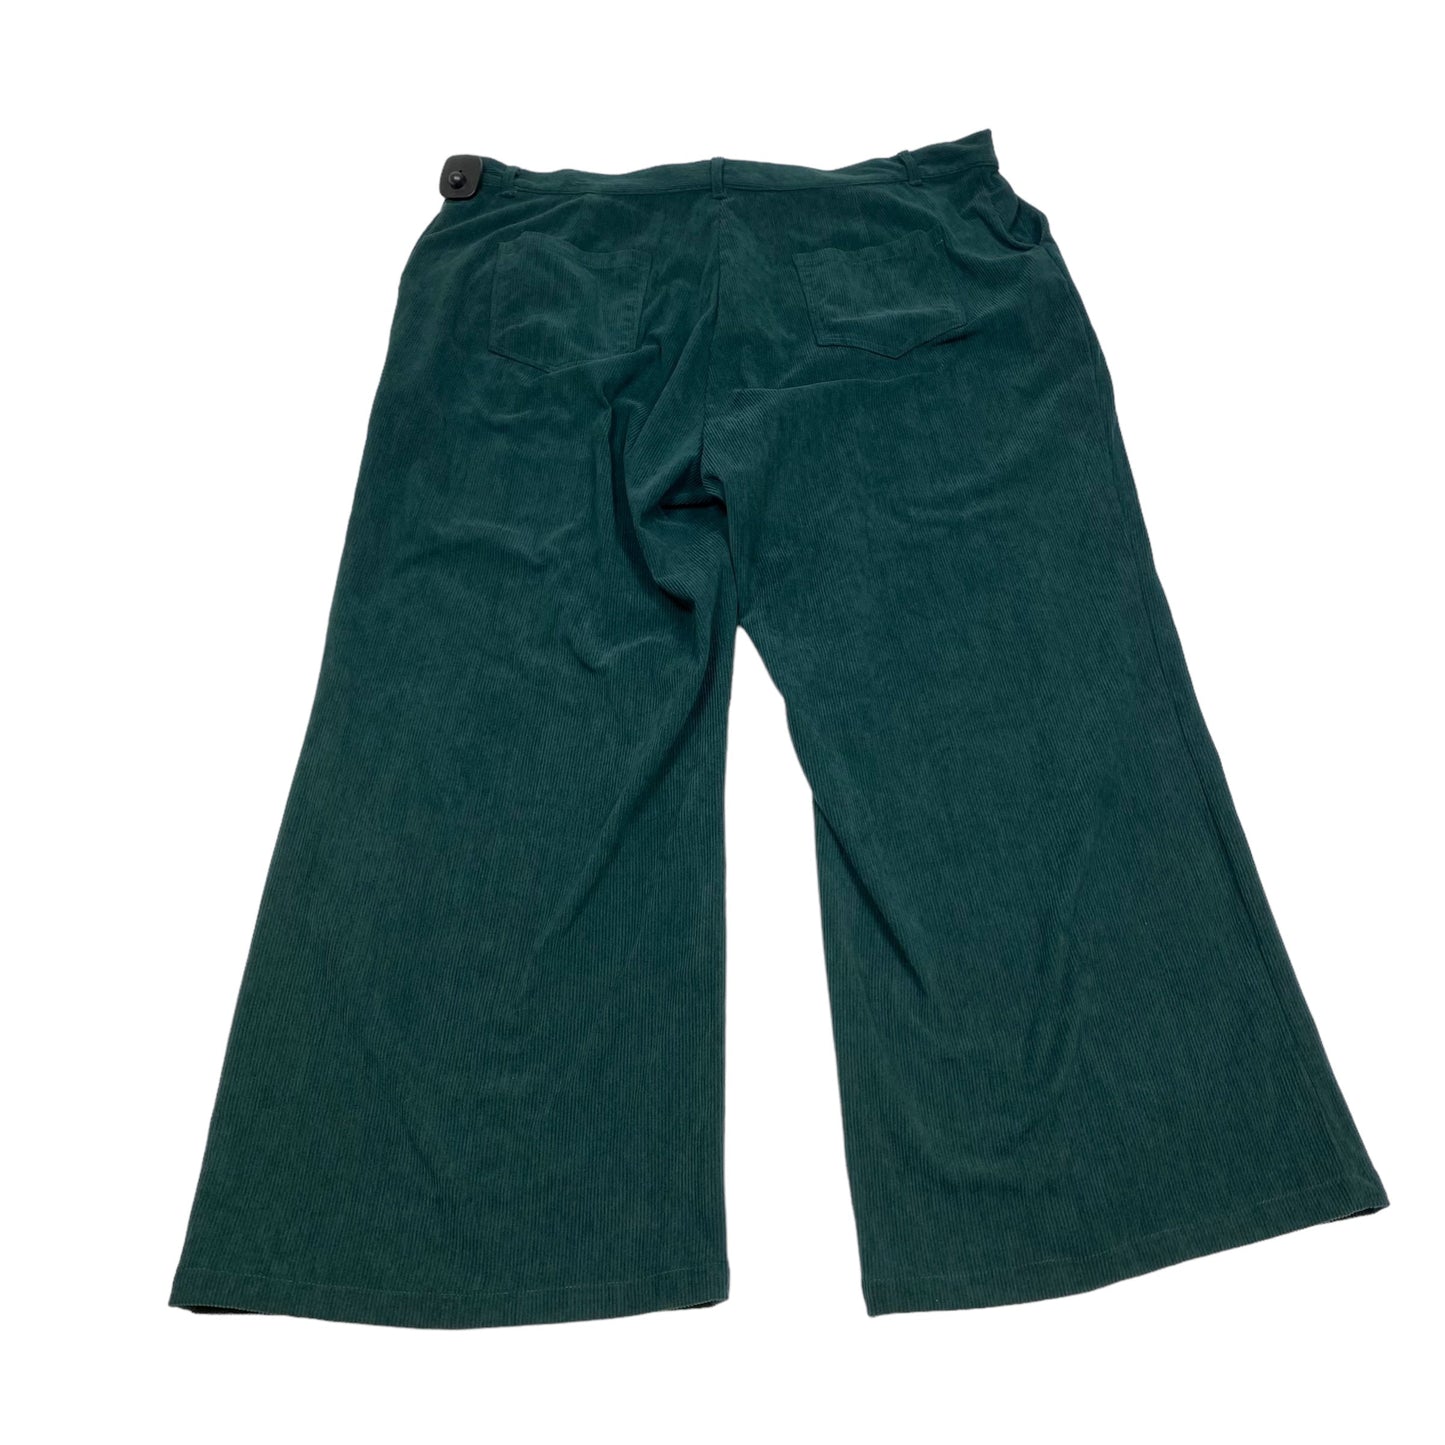 Green Pants Corduroy Clothes Mentor, Size 3x